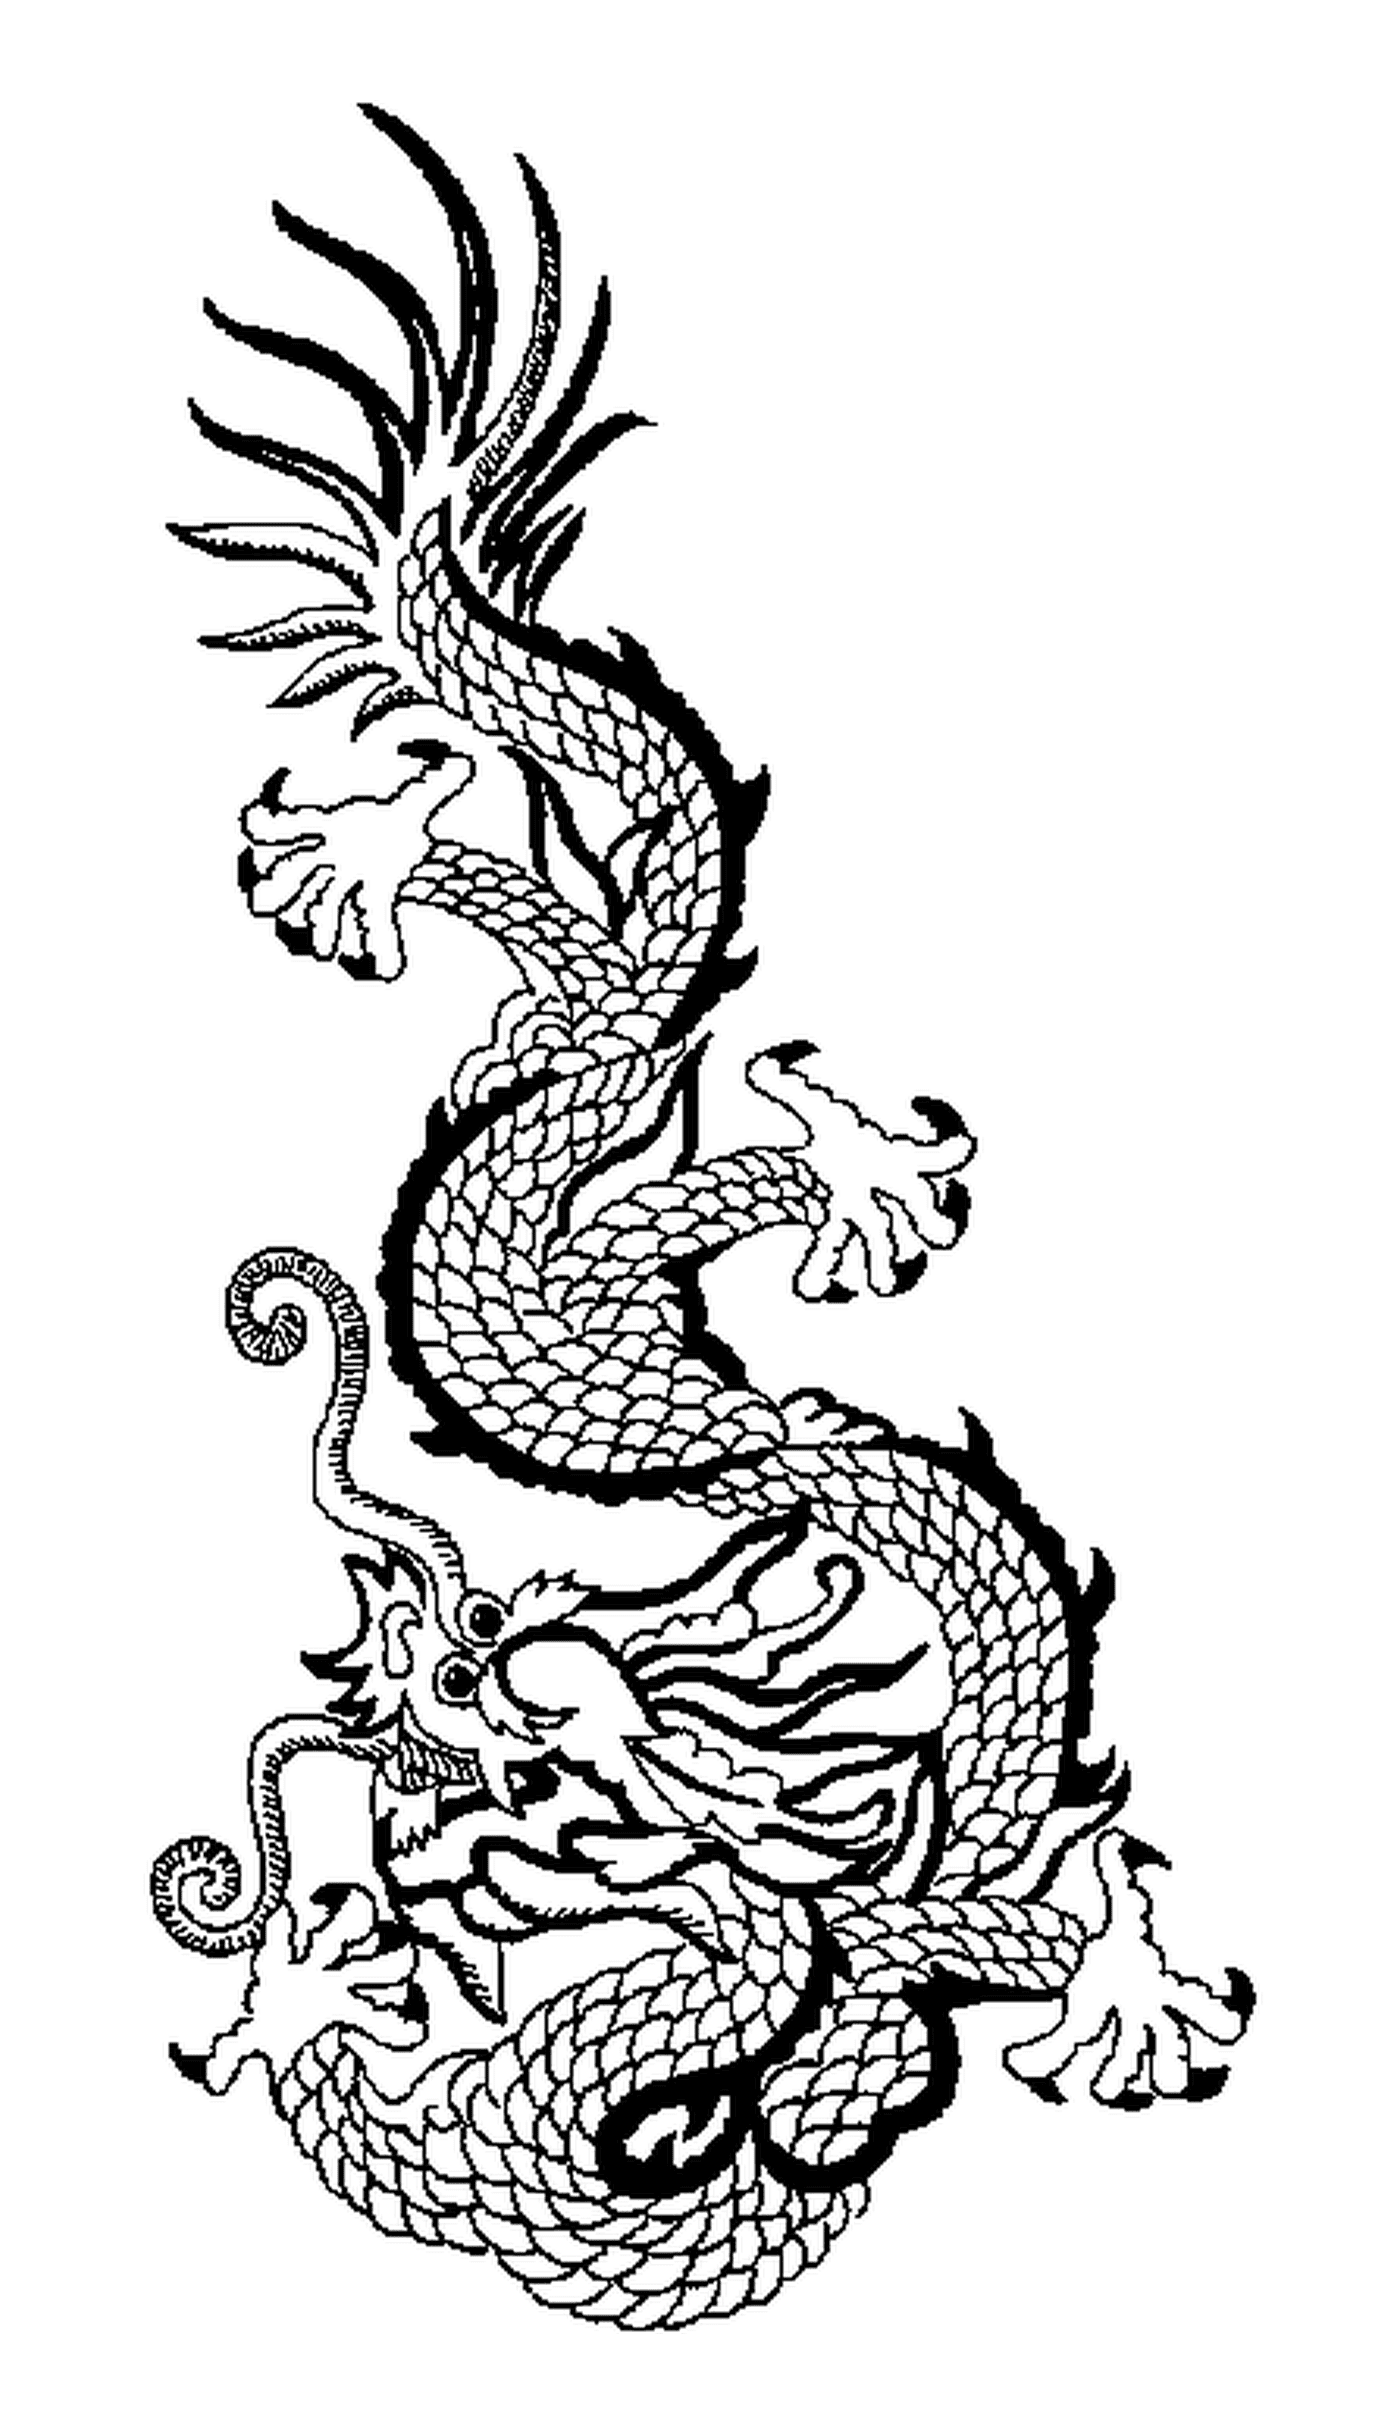  चीनी ड्रैगन 